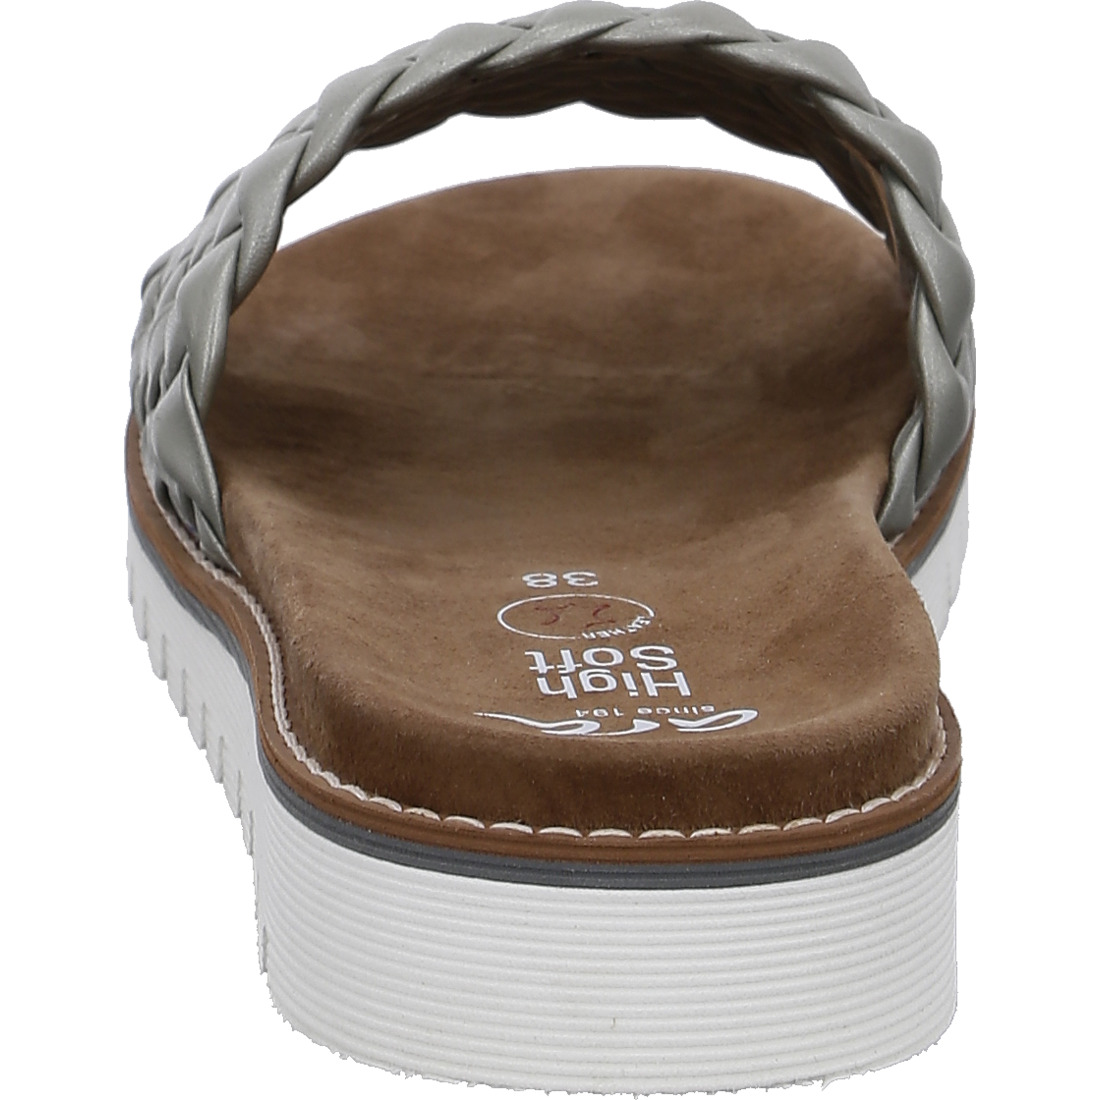 HighSoft*Ara Shoes HighSoft Mules Kent-Sport ash